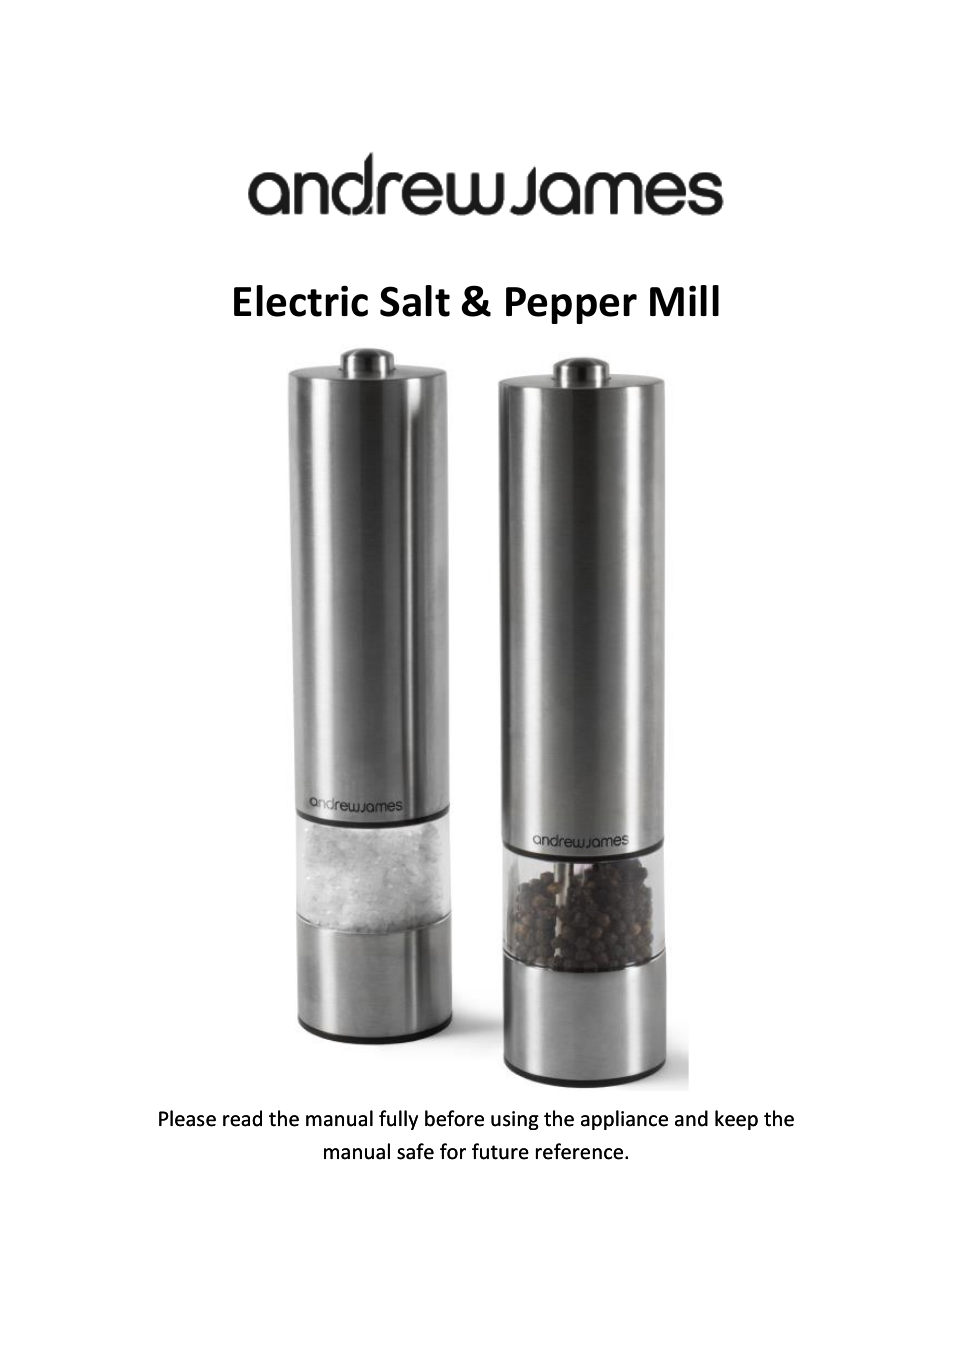 AJ000568 Electric Salt and Pepper Mill Set